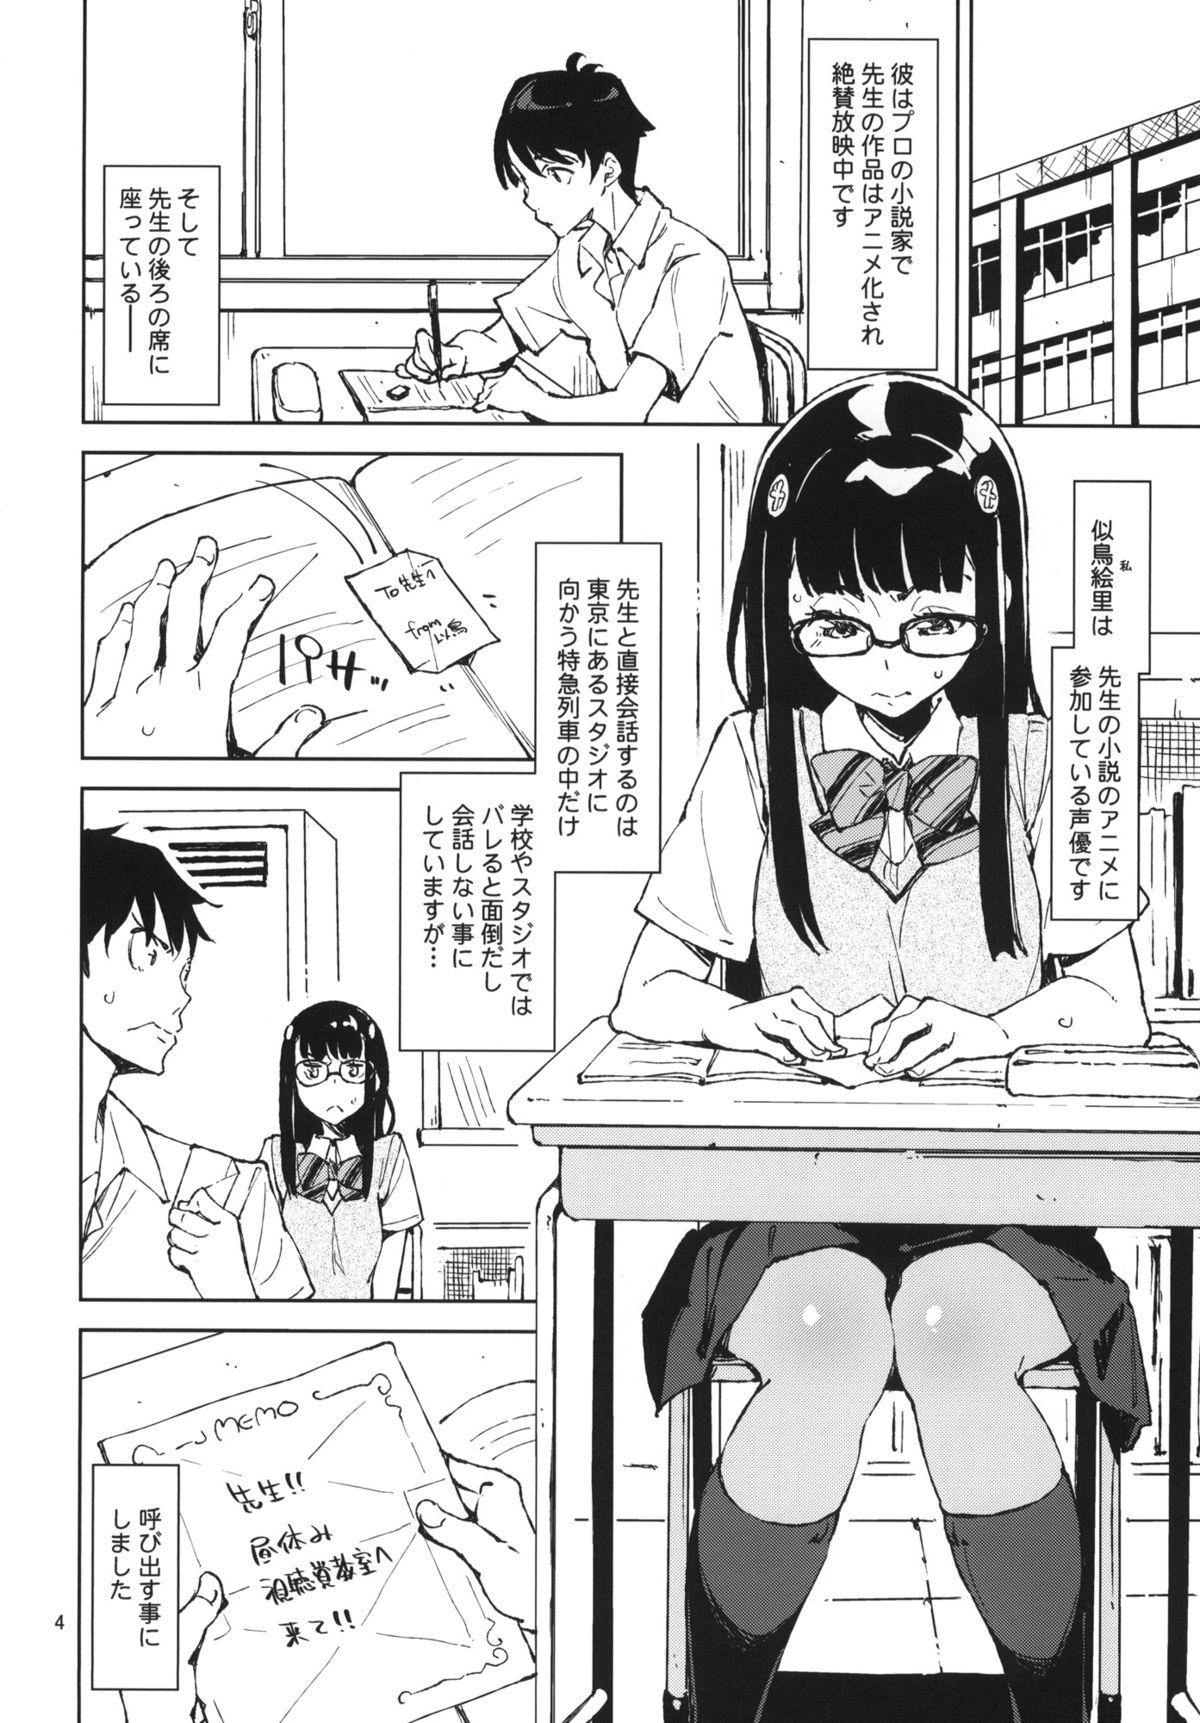 Pussylicking Pony - Danshi koukousei de urekko light novel sakka o shiteiru keredo Flaquita - Page 3